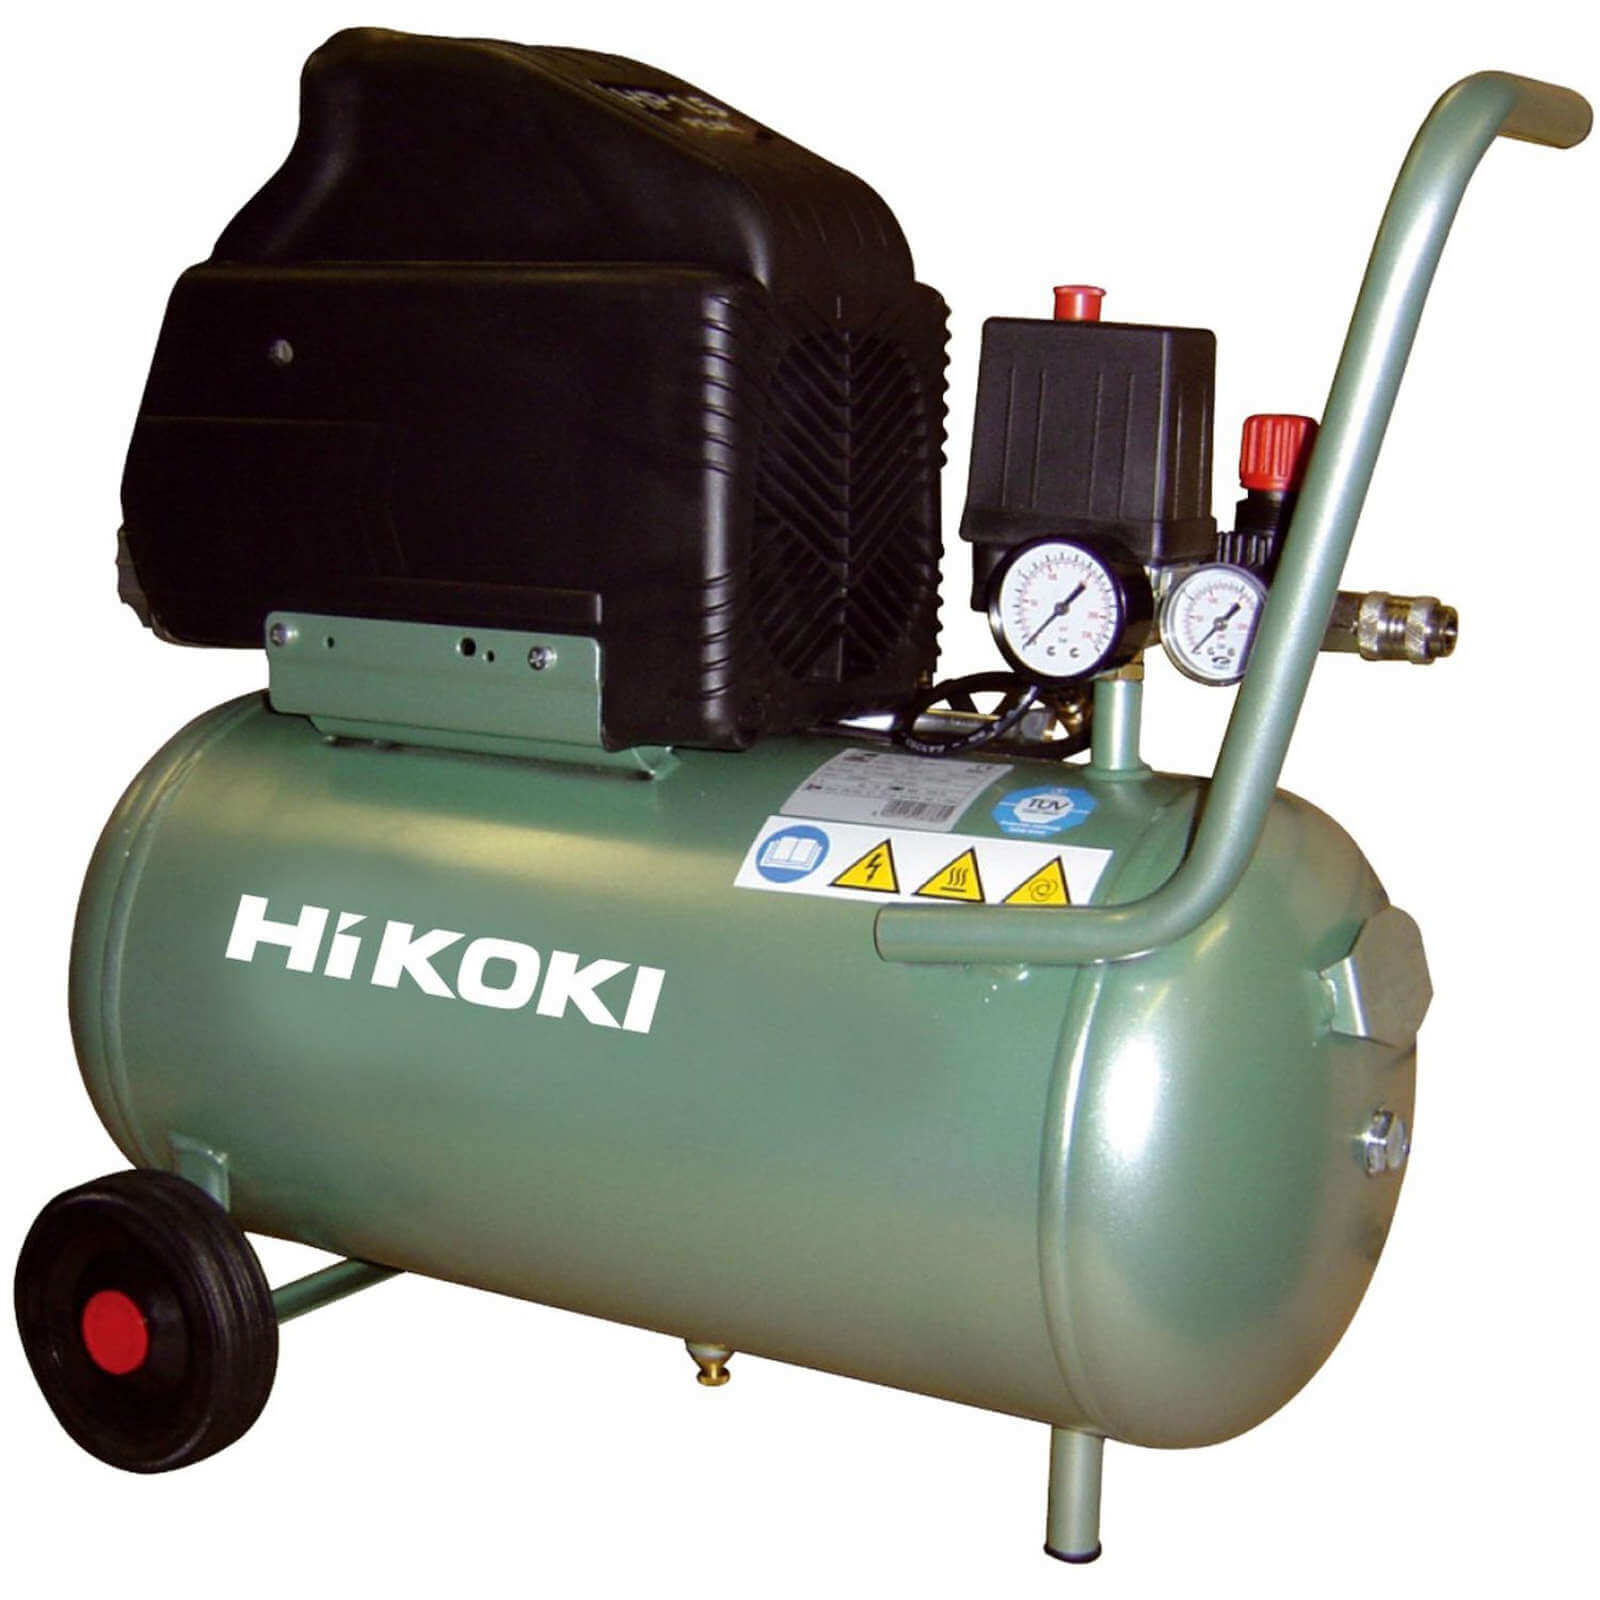 Hikoki Mobilkompressor EC68LAZ Luftkompressor Manometer Tragbarer Kompressor 24L von HiKOKI